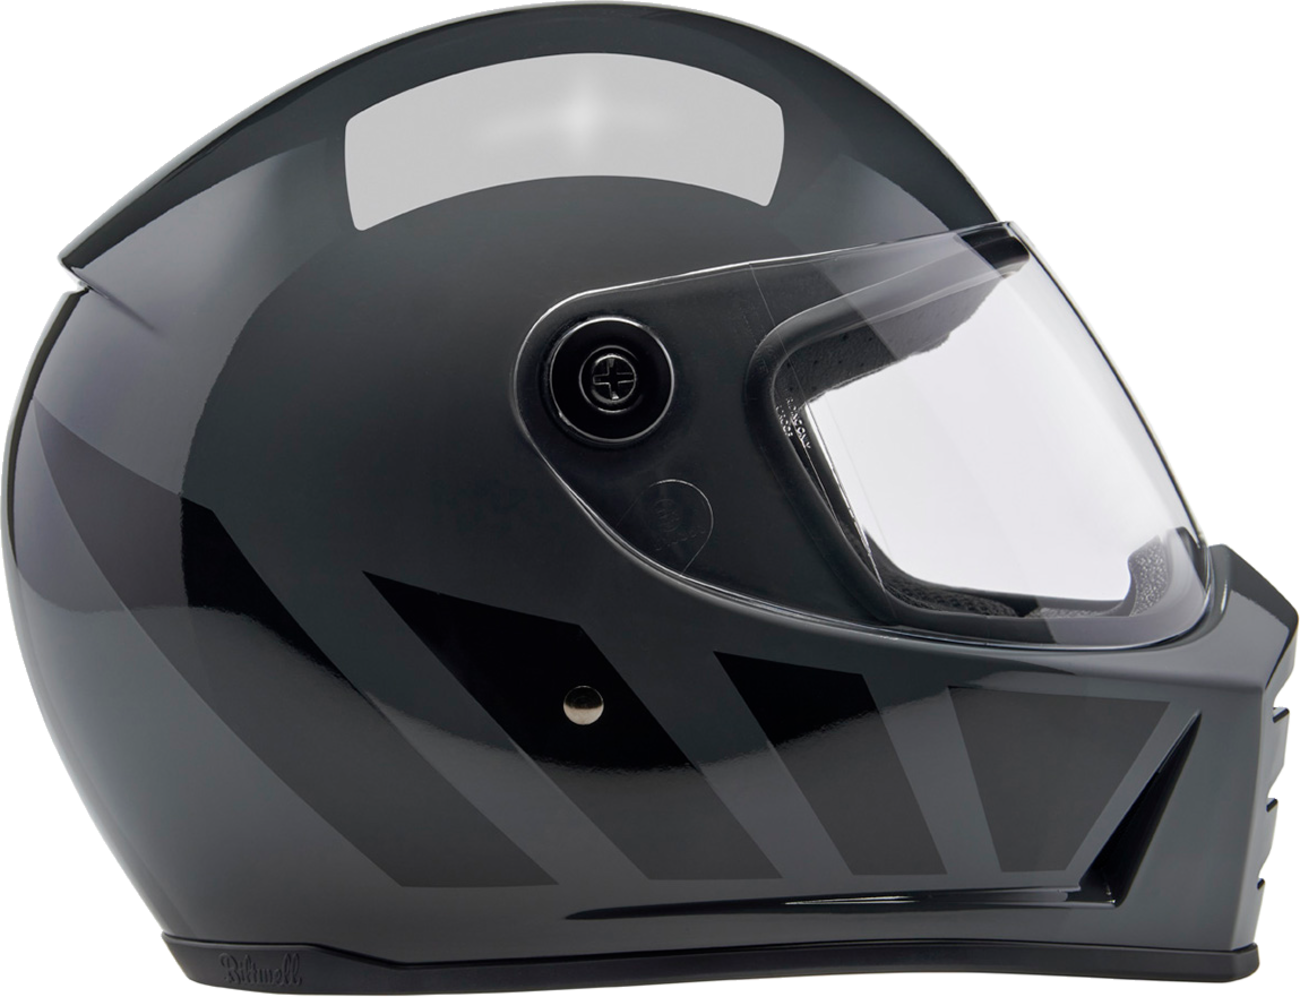 BILTWELL Lane Splitter Helmet - Storm Gray Inertia - XL 1004-569-505